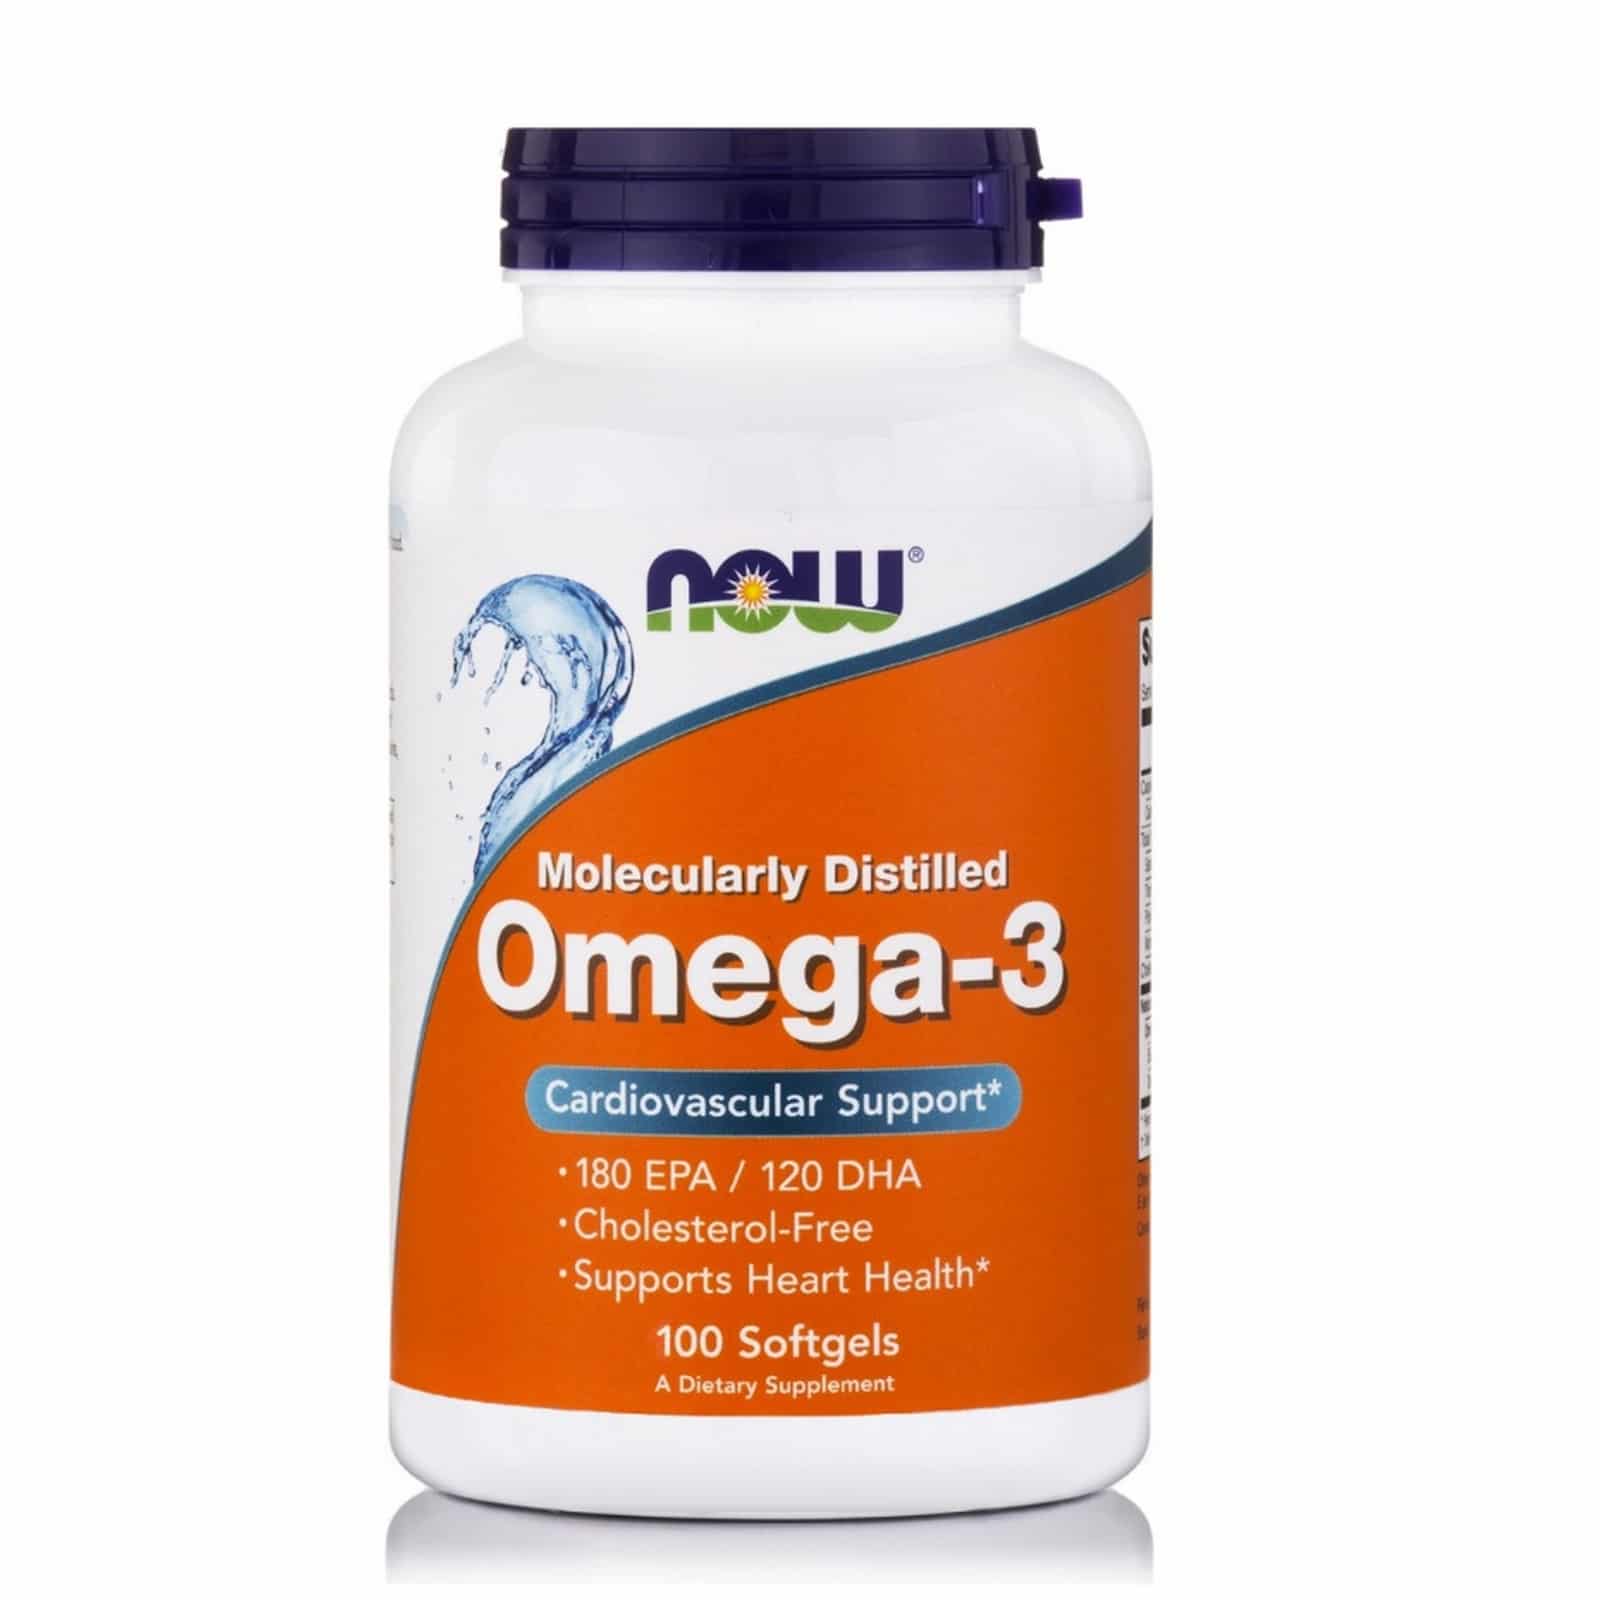 J-Bio 1000 mg High Potency Omega-3 Fish Oil 100 Softgels